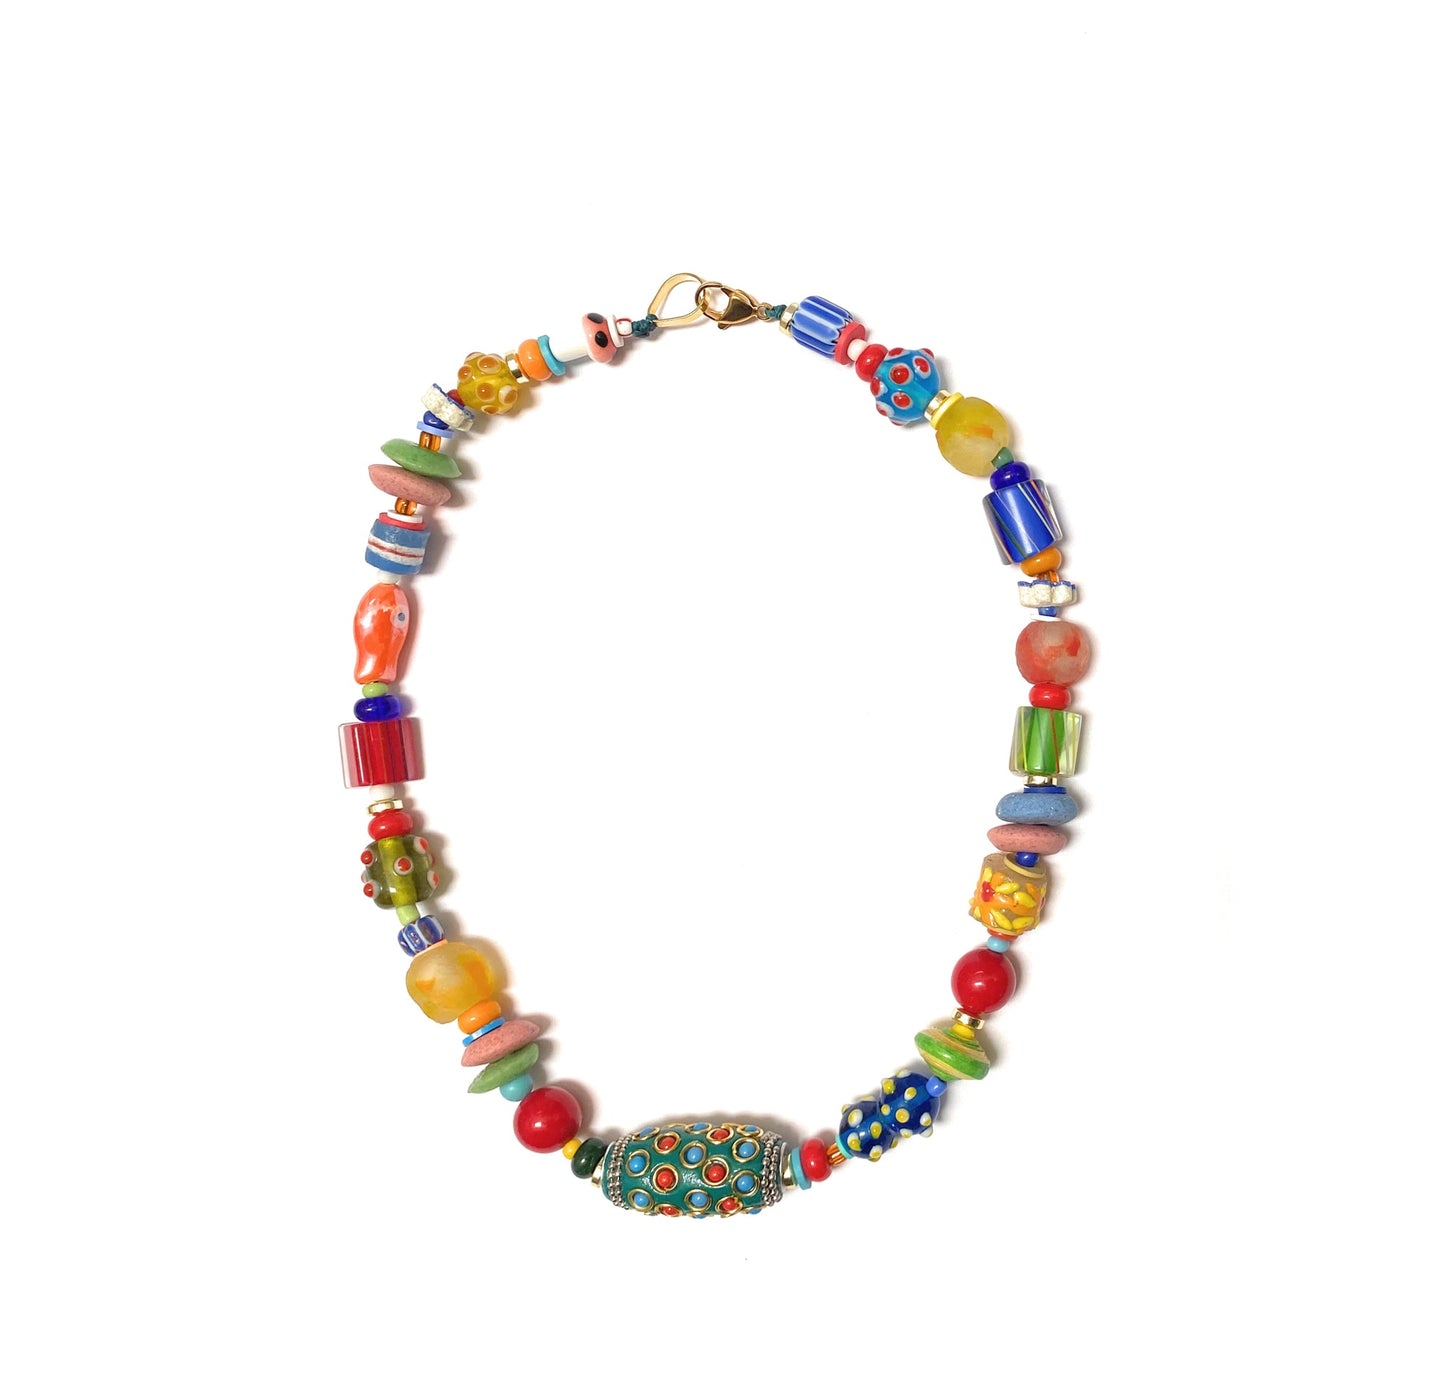 Collar de Vidrio Africano Multicolor - GRANATE 27